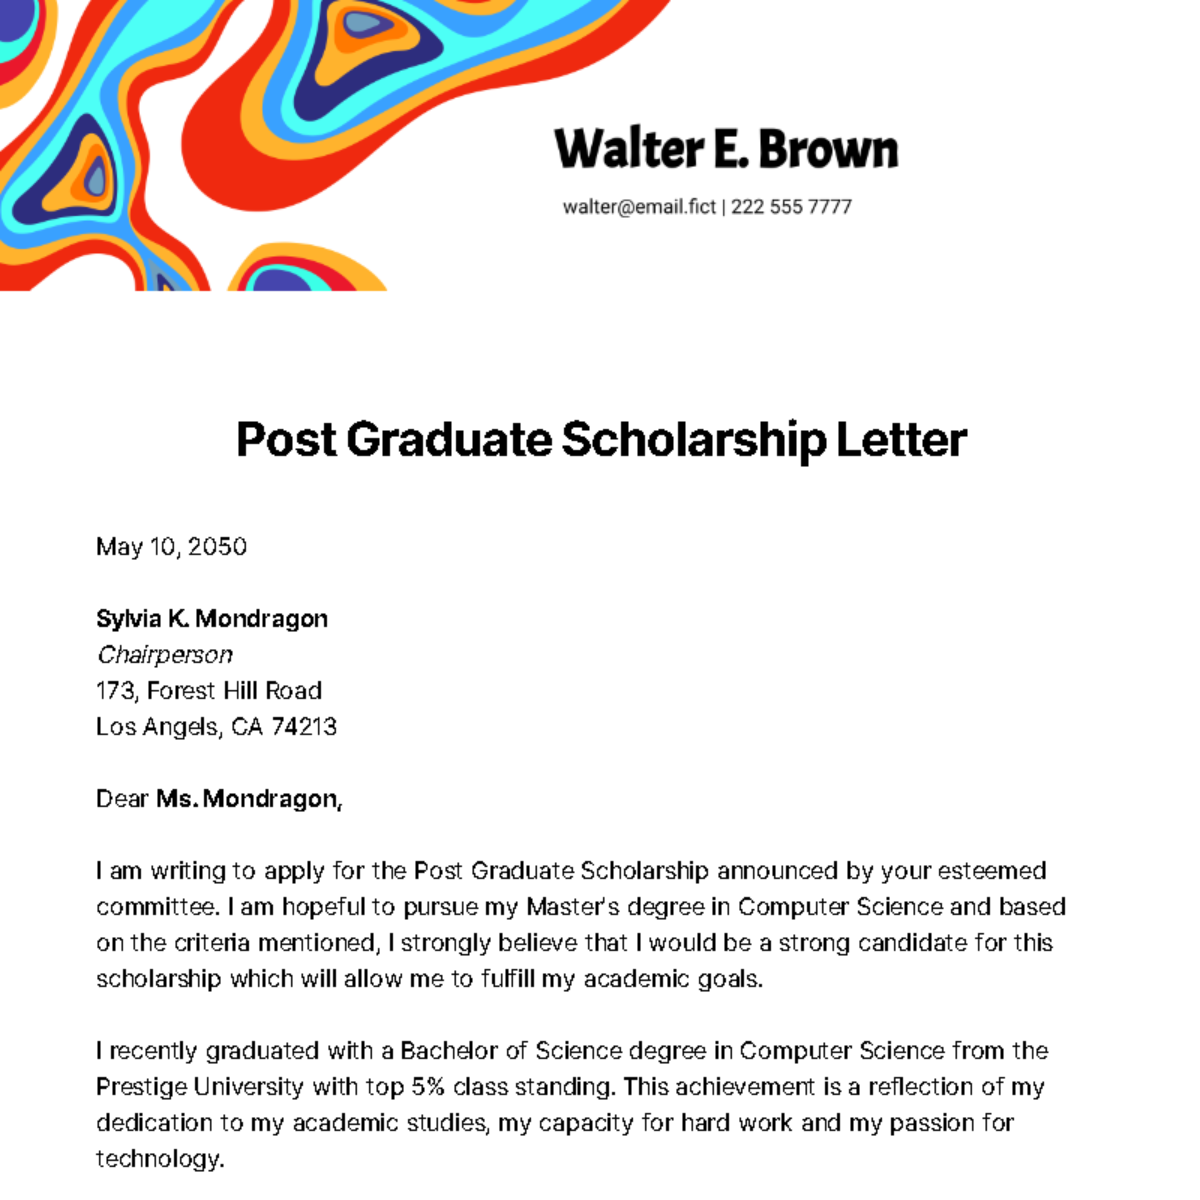 Post Graduate Scholarship Letter Template